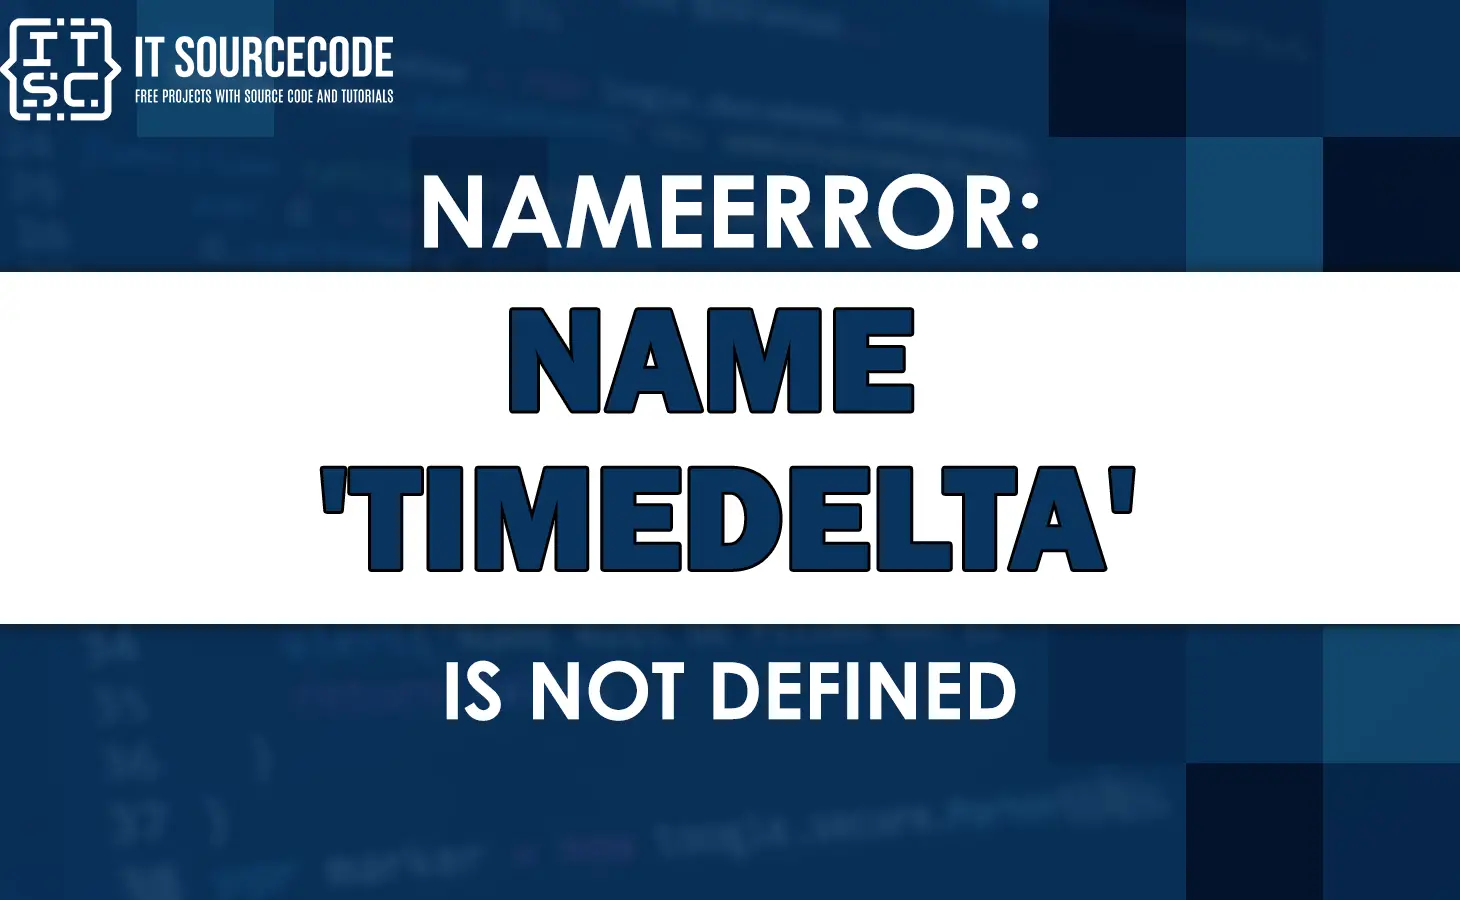 Nameerror: name 'timedelta' is not defined